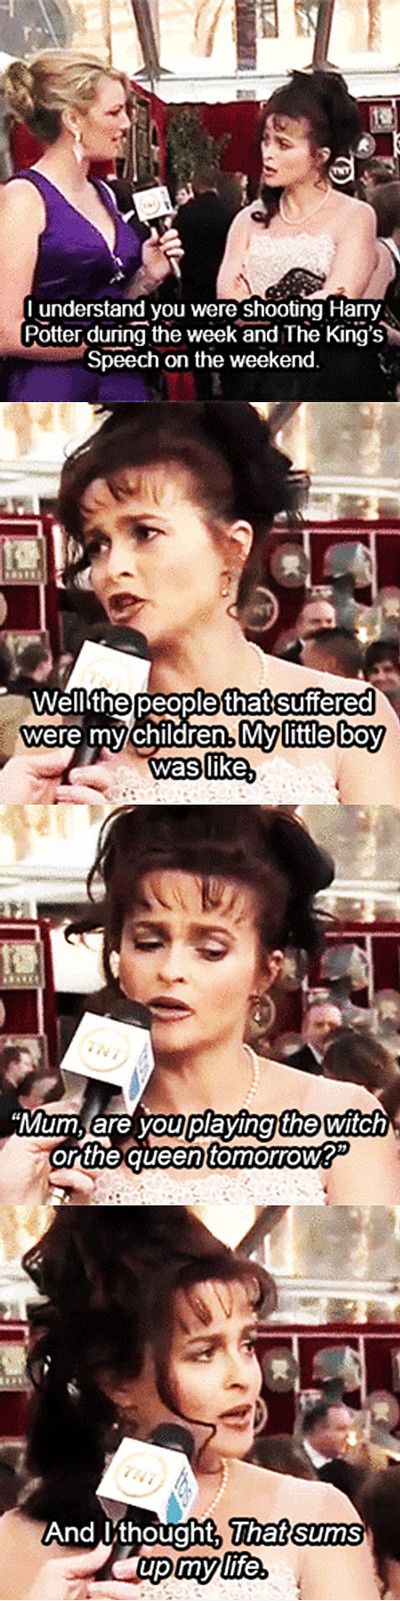 Helena Bonham Carter is amazing.